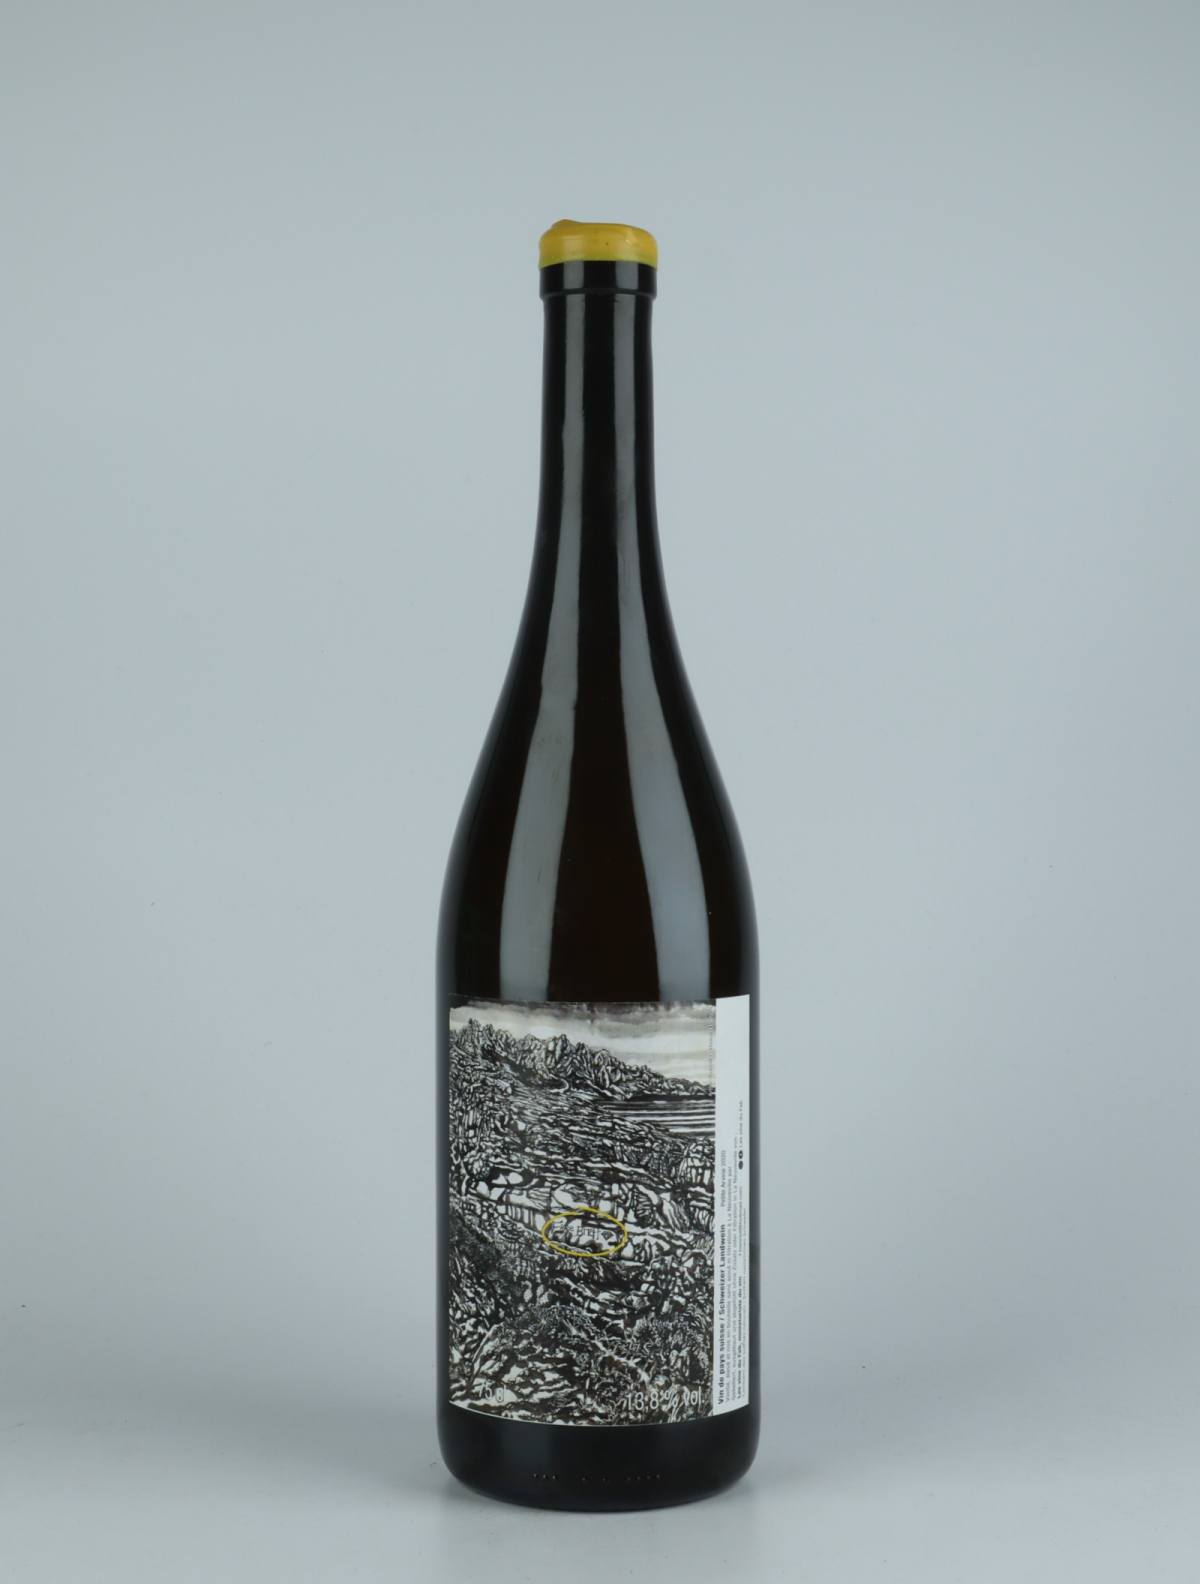 A bottle 2020 Petit Arvine White wine from Les Vins du Fab, Neuchâtel in Switzerland